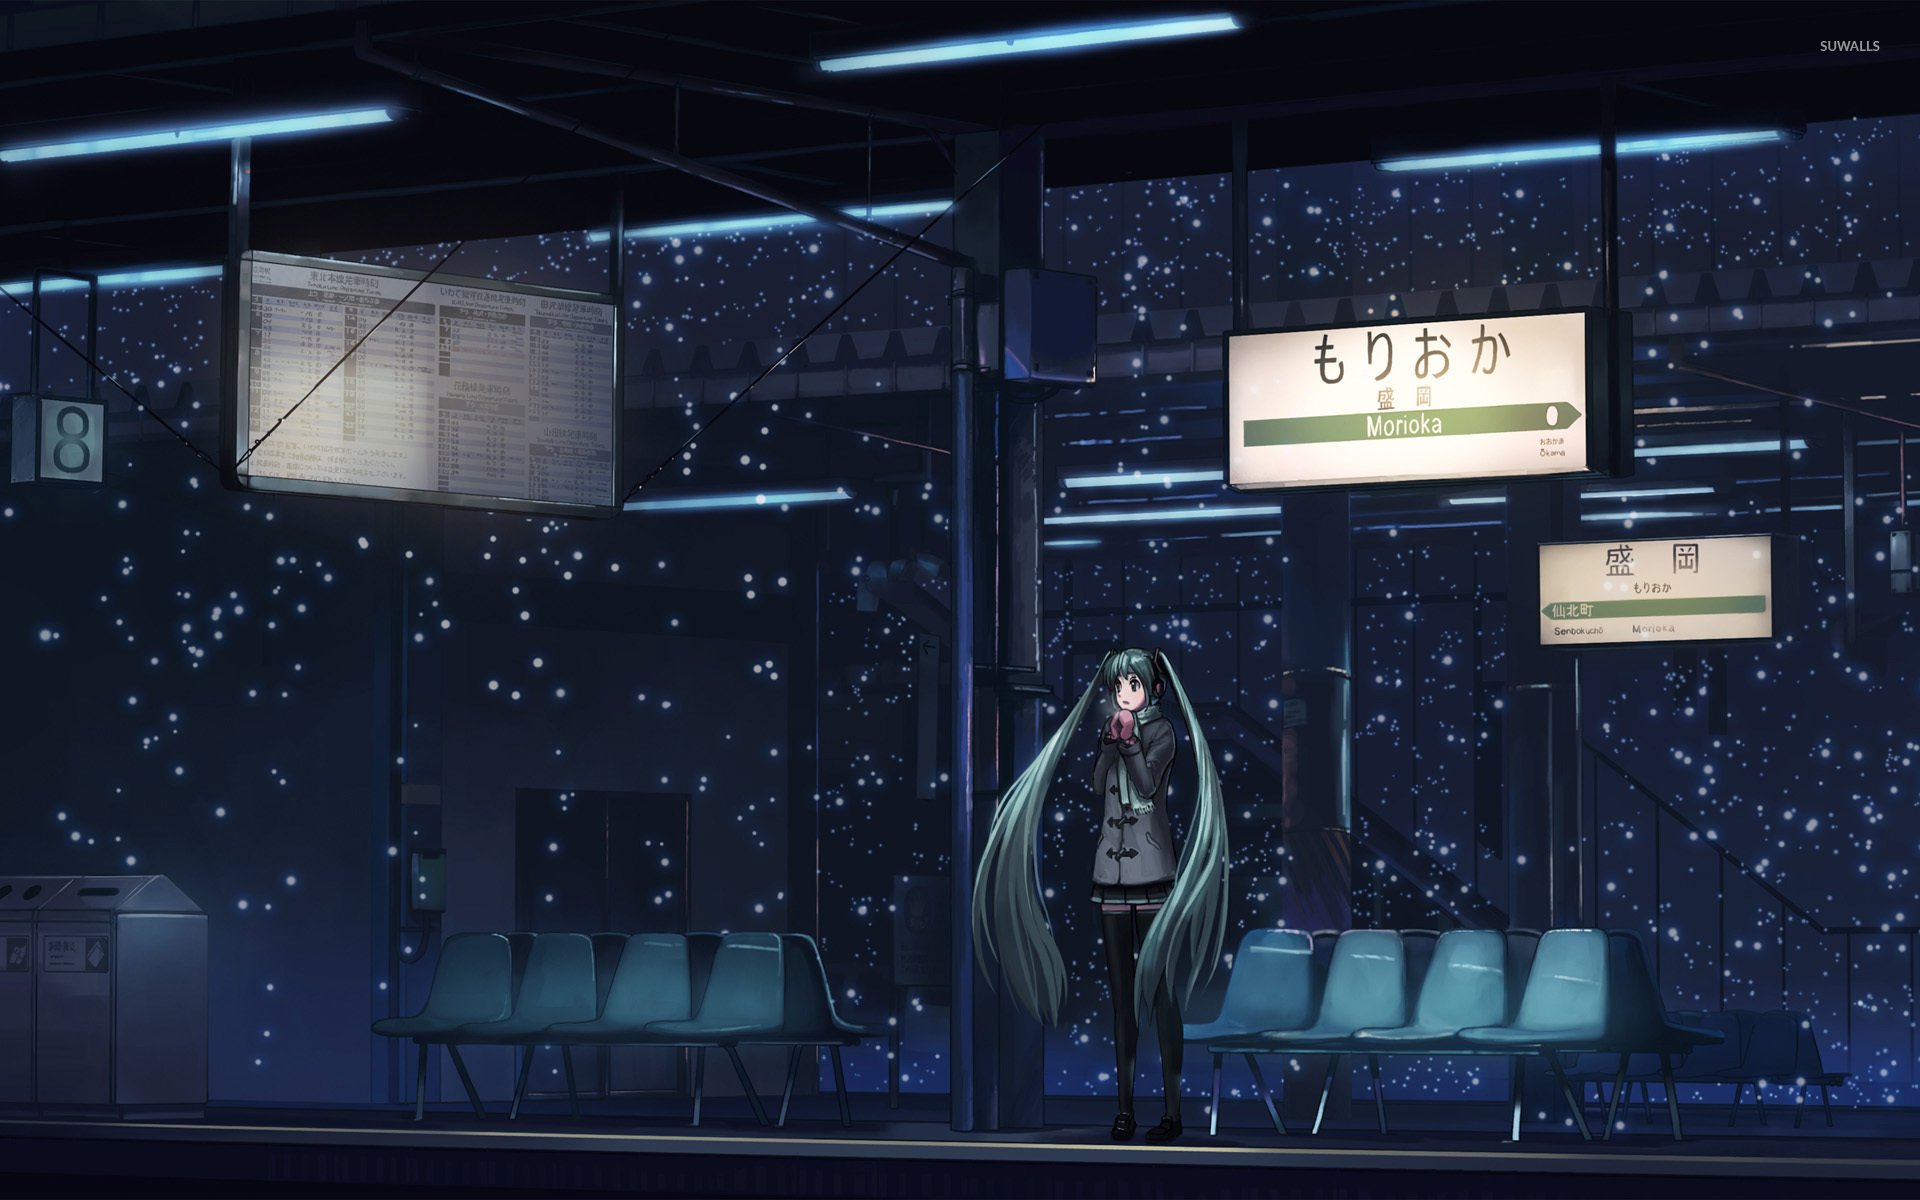 Hatsune Miku in the bus station wallpaper wallpaper